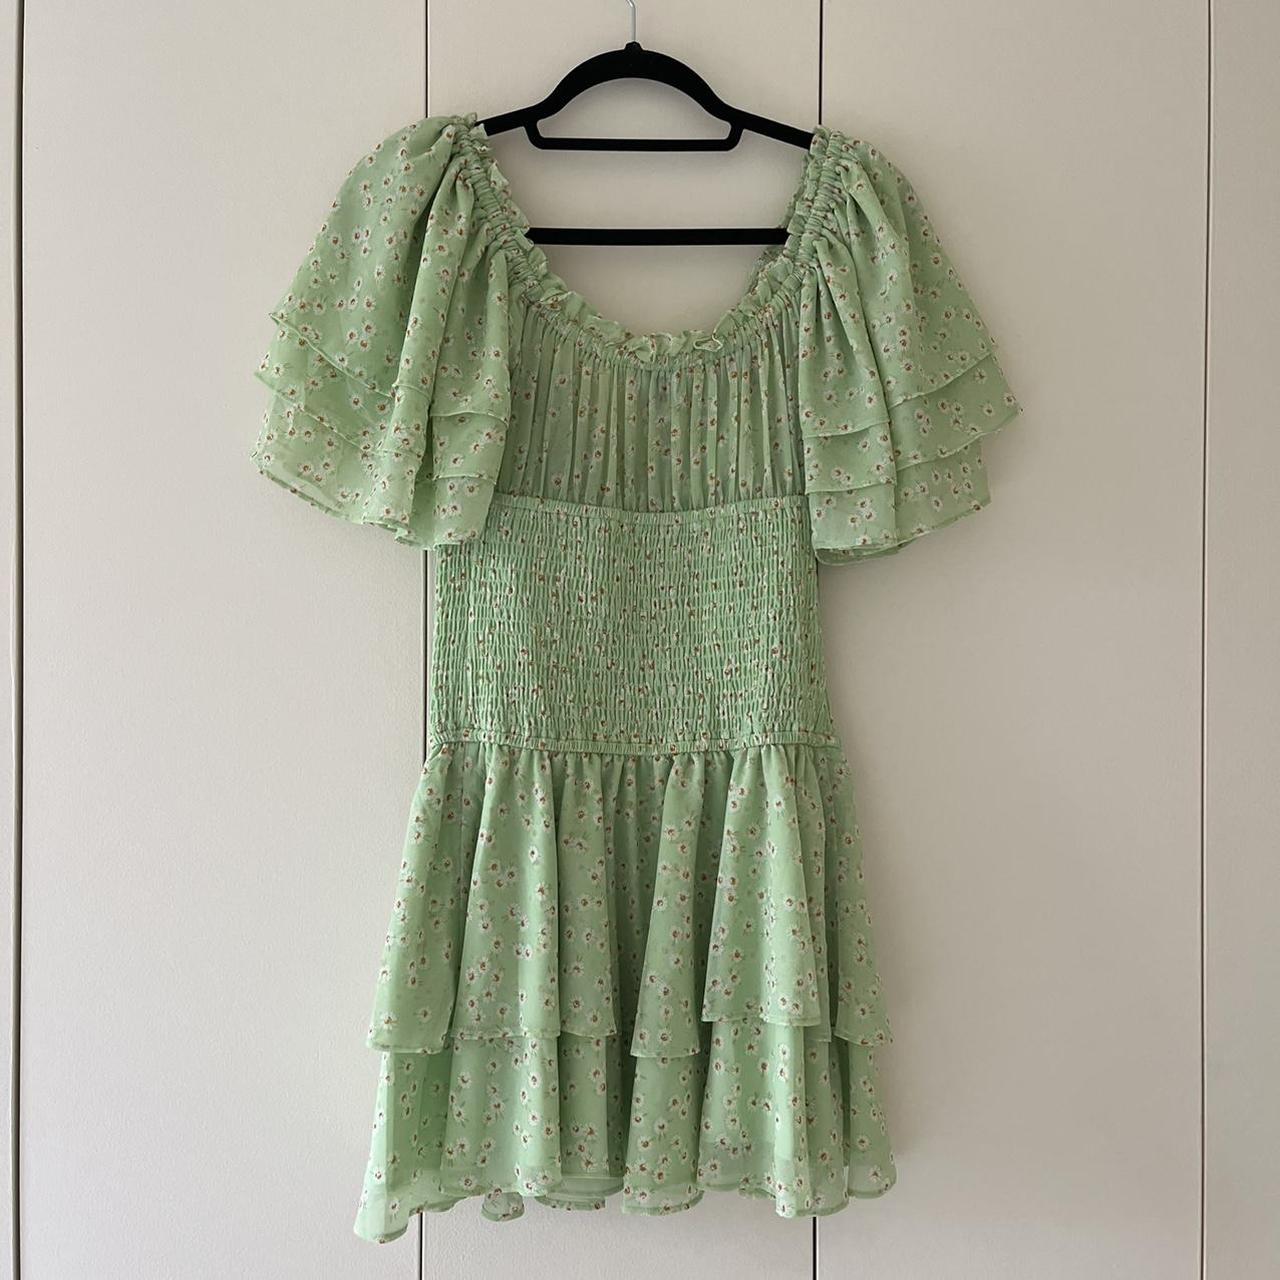 Product Image 3 - Sabo Skirt Liv Dress. A